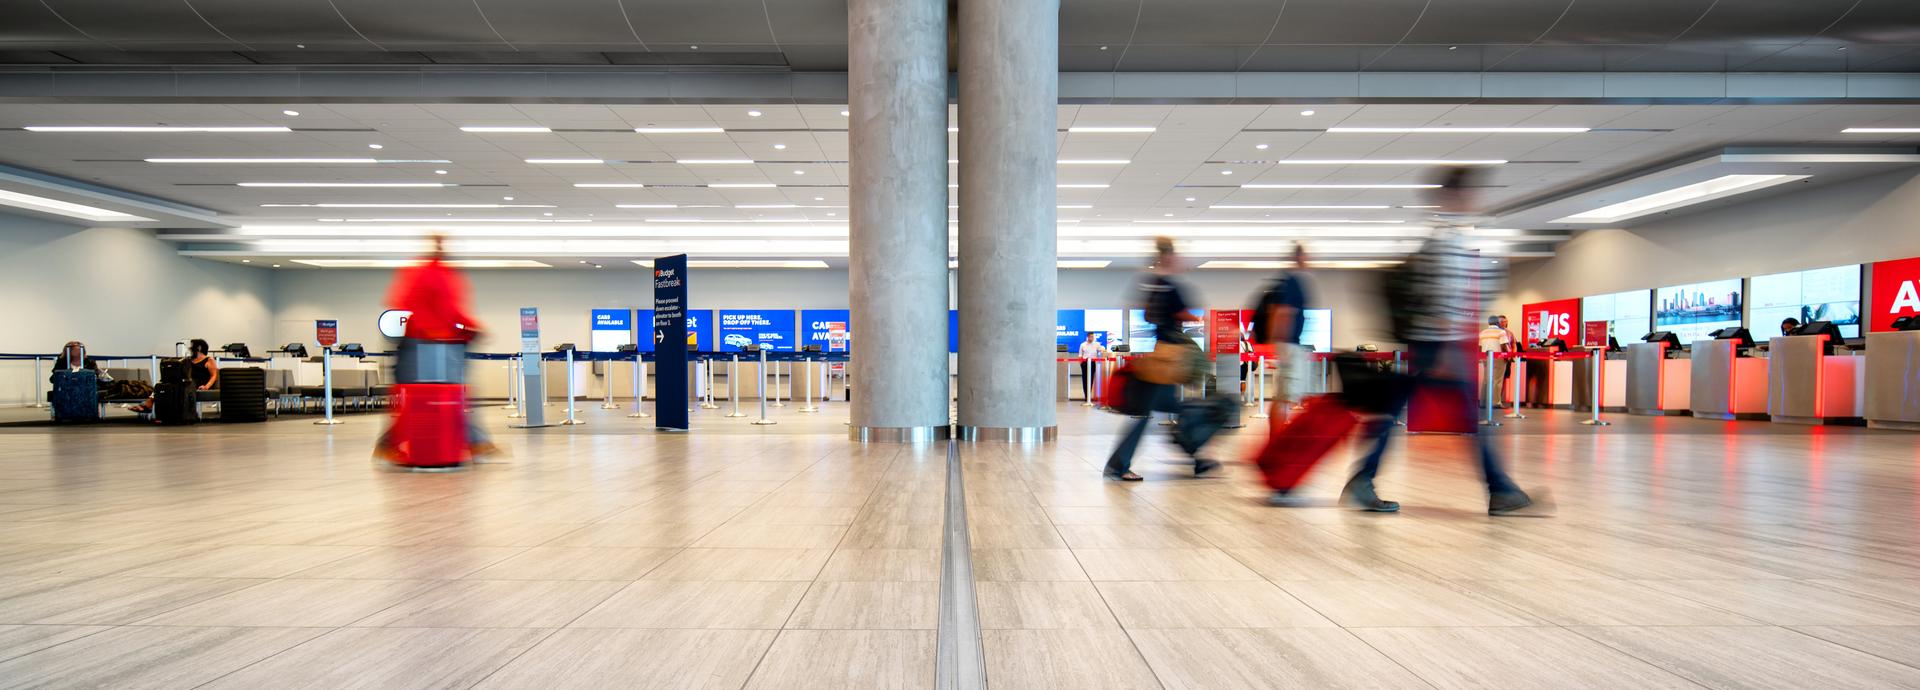 Tampa Airport Conrac for CS - CONRAC Floor Strip One Point Centered to BudgetAvis.tif